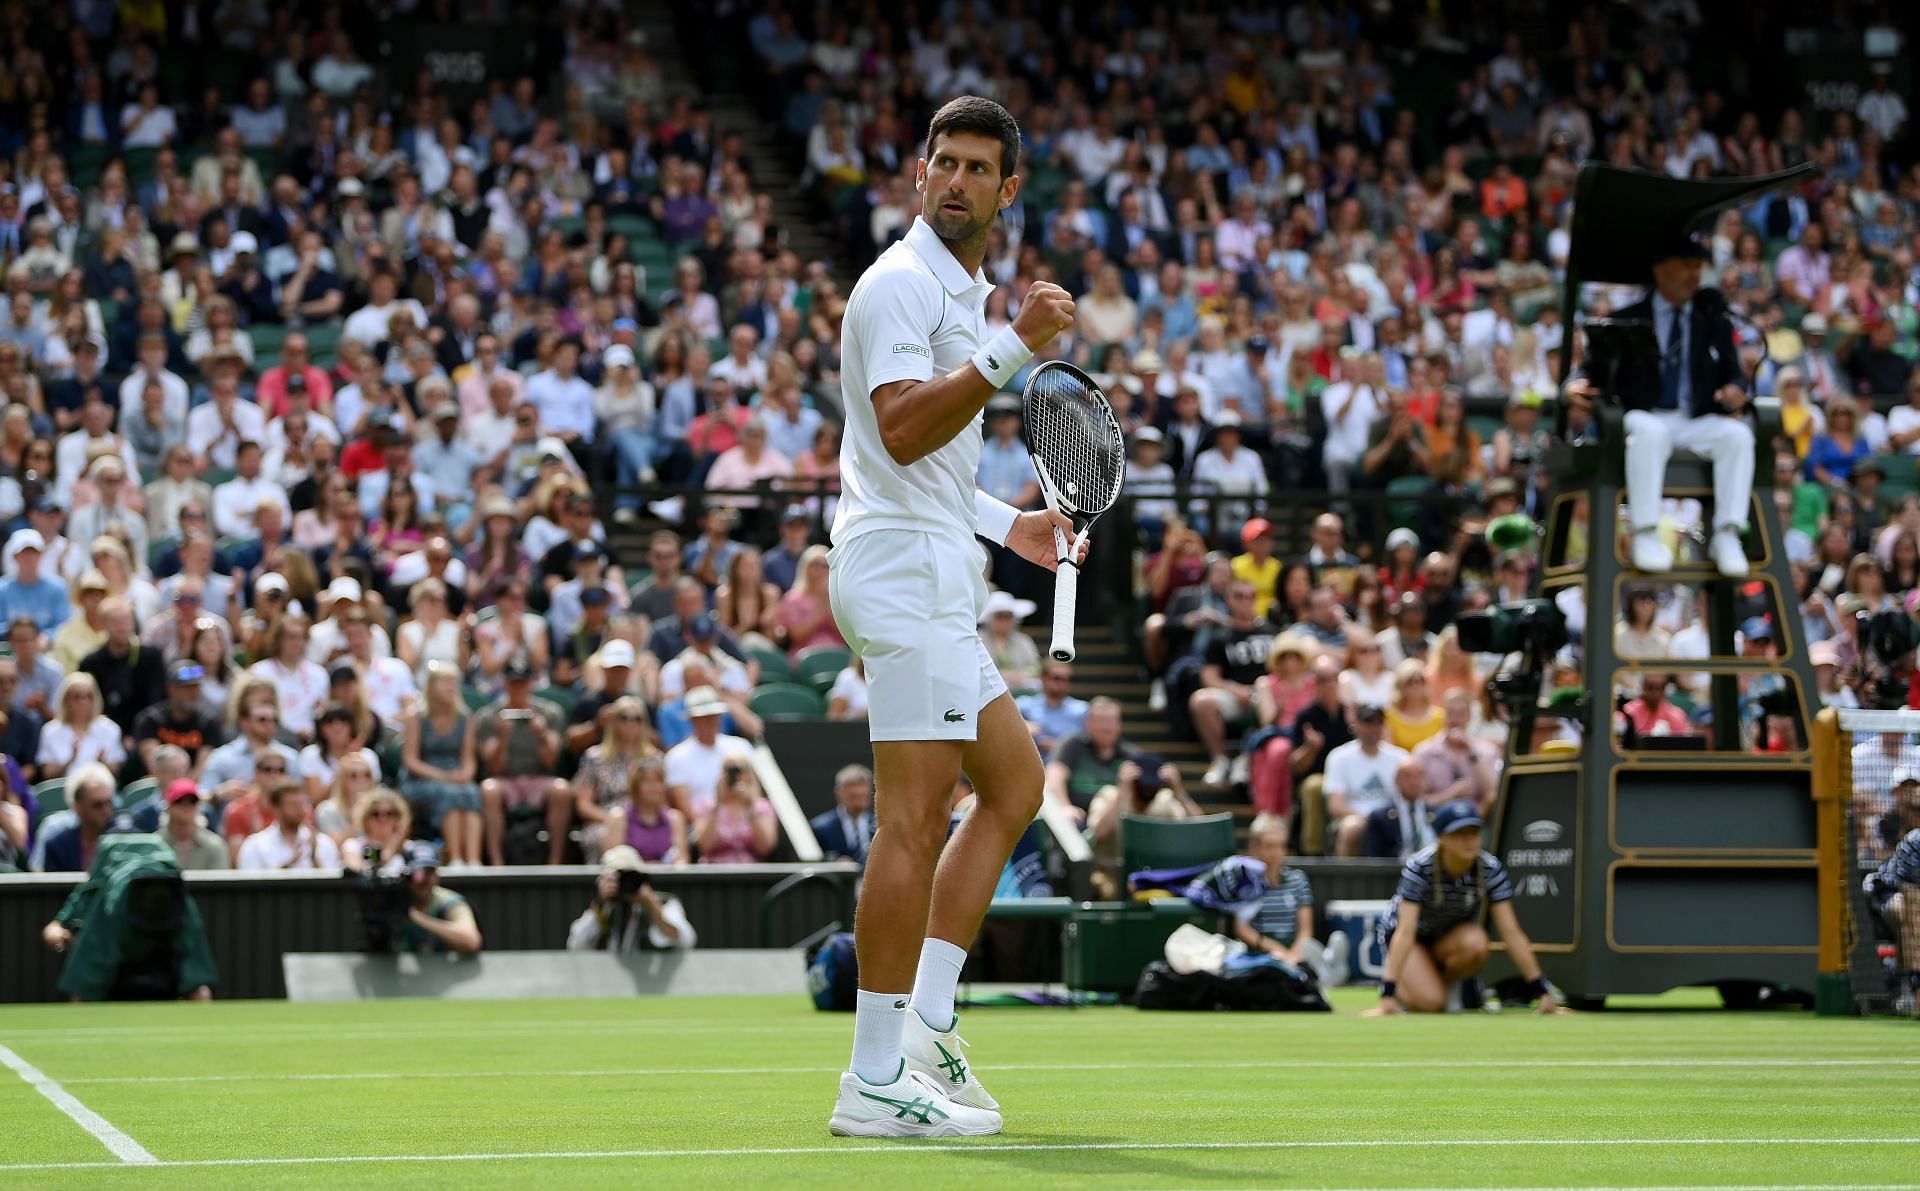 Novak Djokovic takes on compatriot Miomir Kecmanovic in Centre Court on Day 5